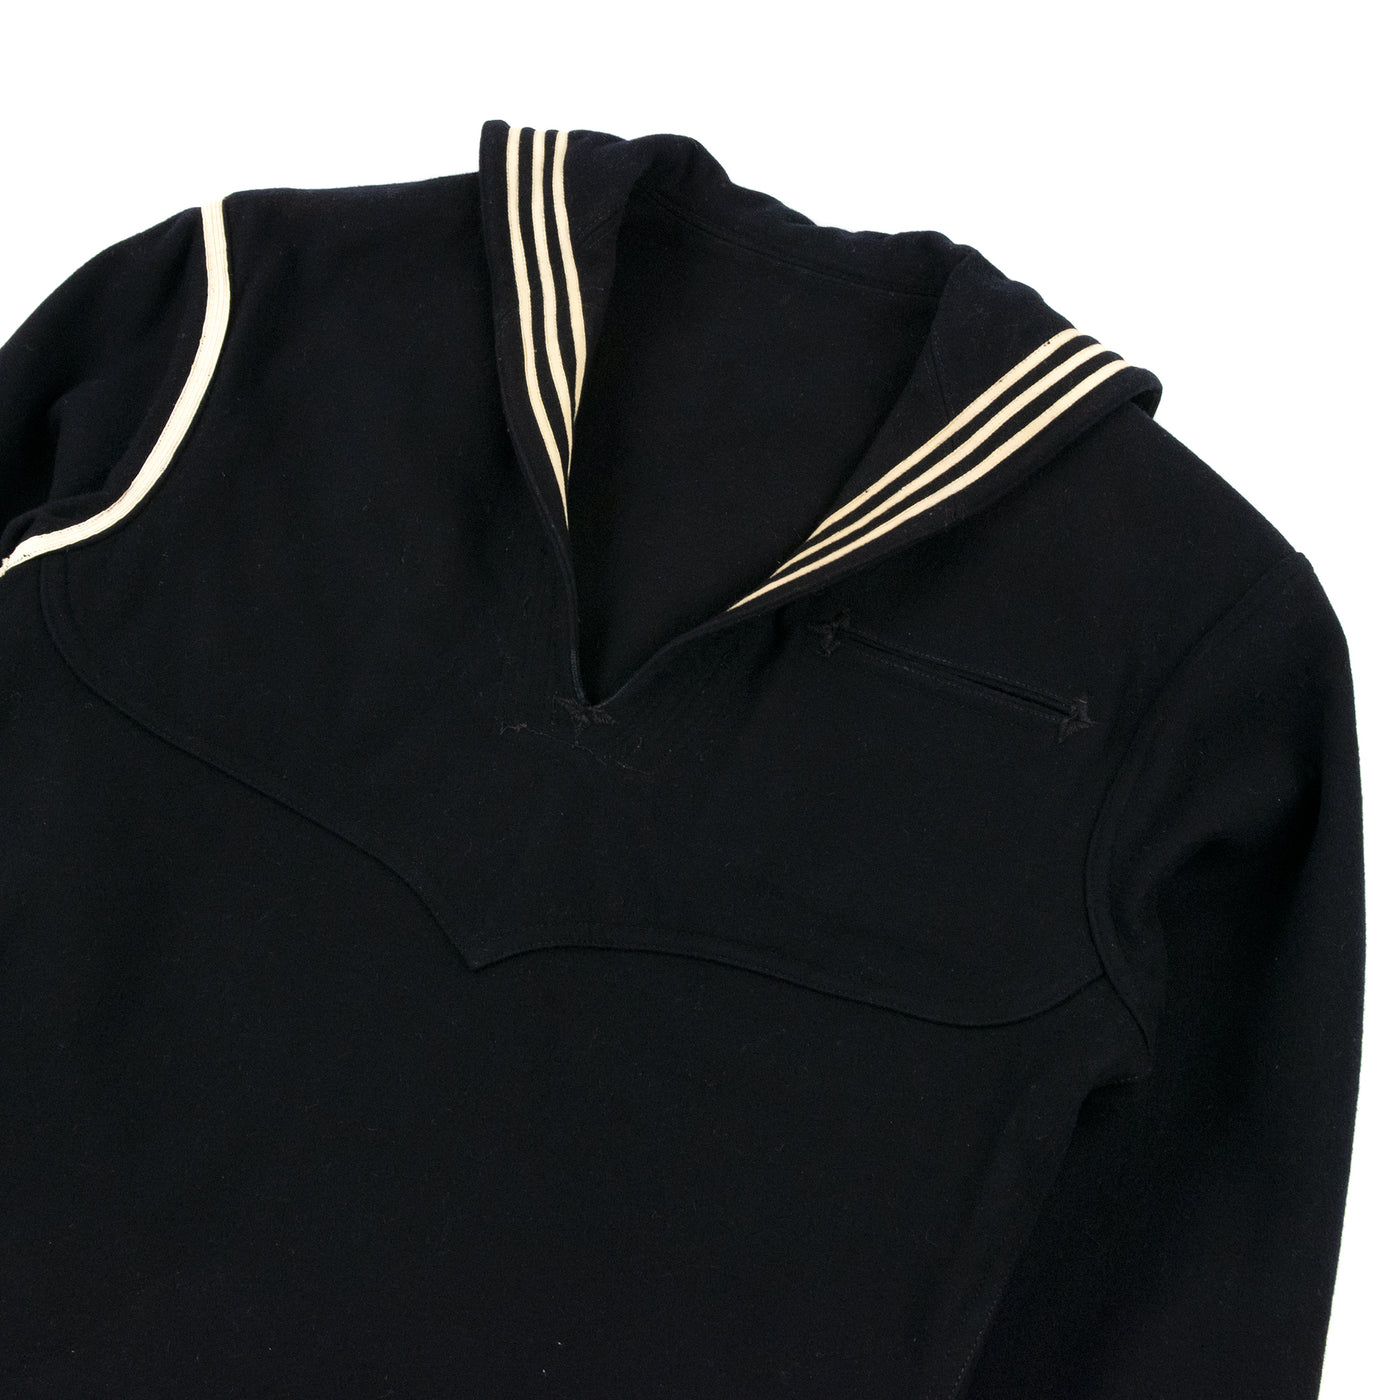 Vintage 1940s WW2 Era US Navy Cracker Jack Military Wool Shirt - XS Front